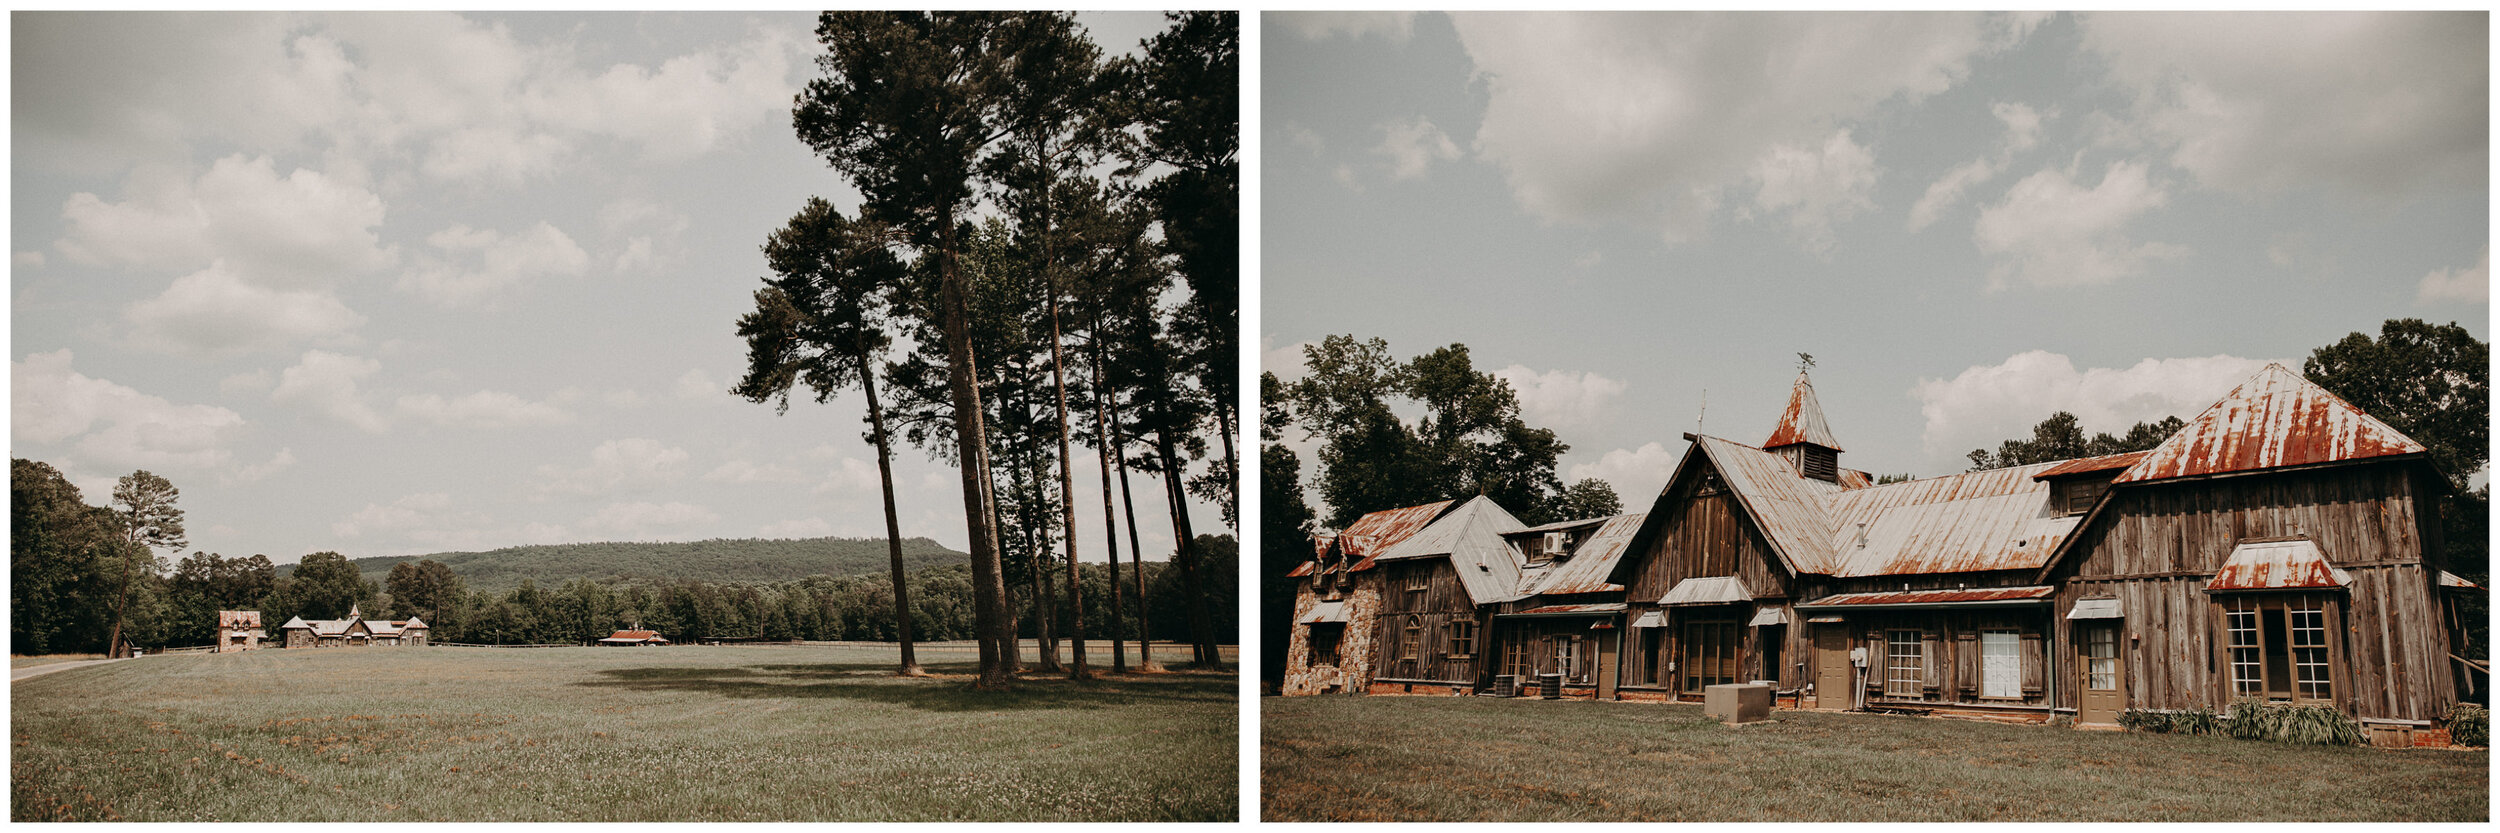 Atlanta_Wedding Day || The Farm at Rome-Ga, Aline Marin Photography1.jpg